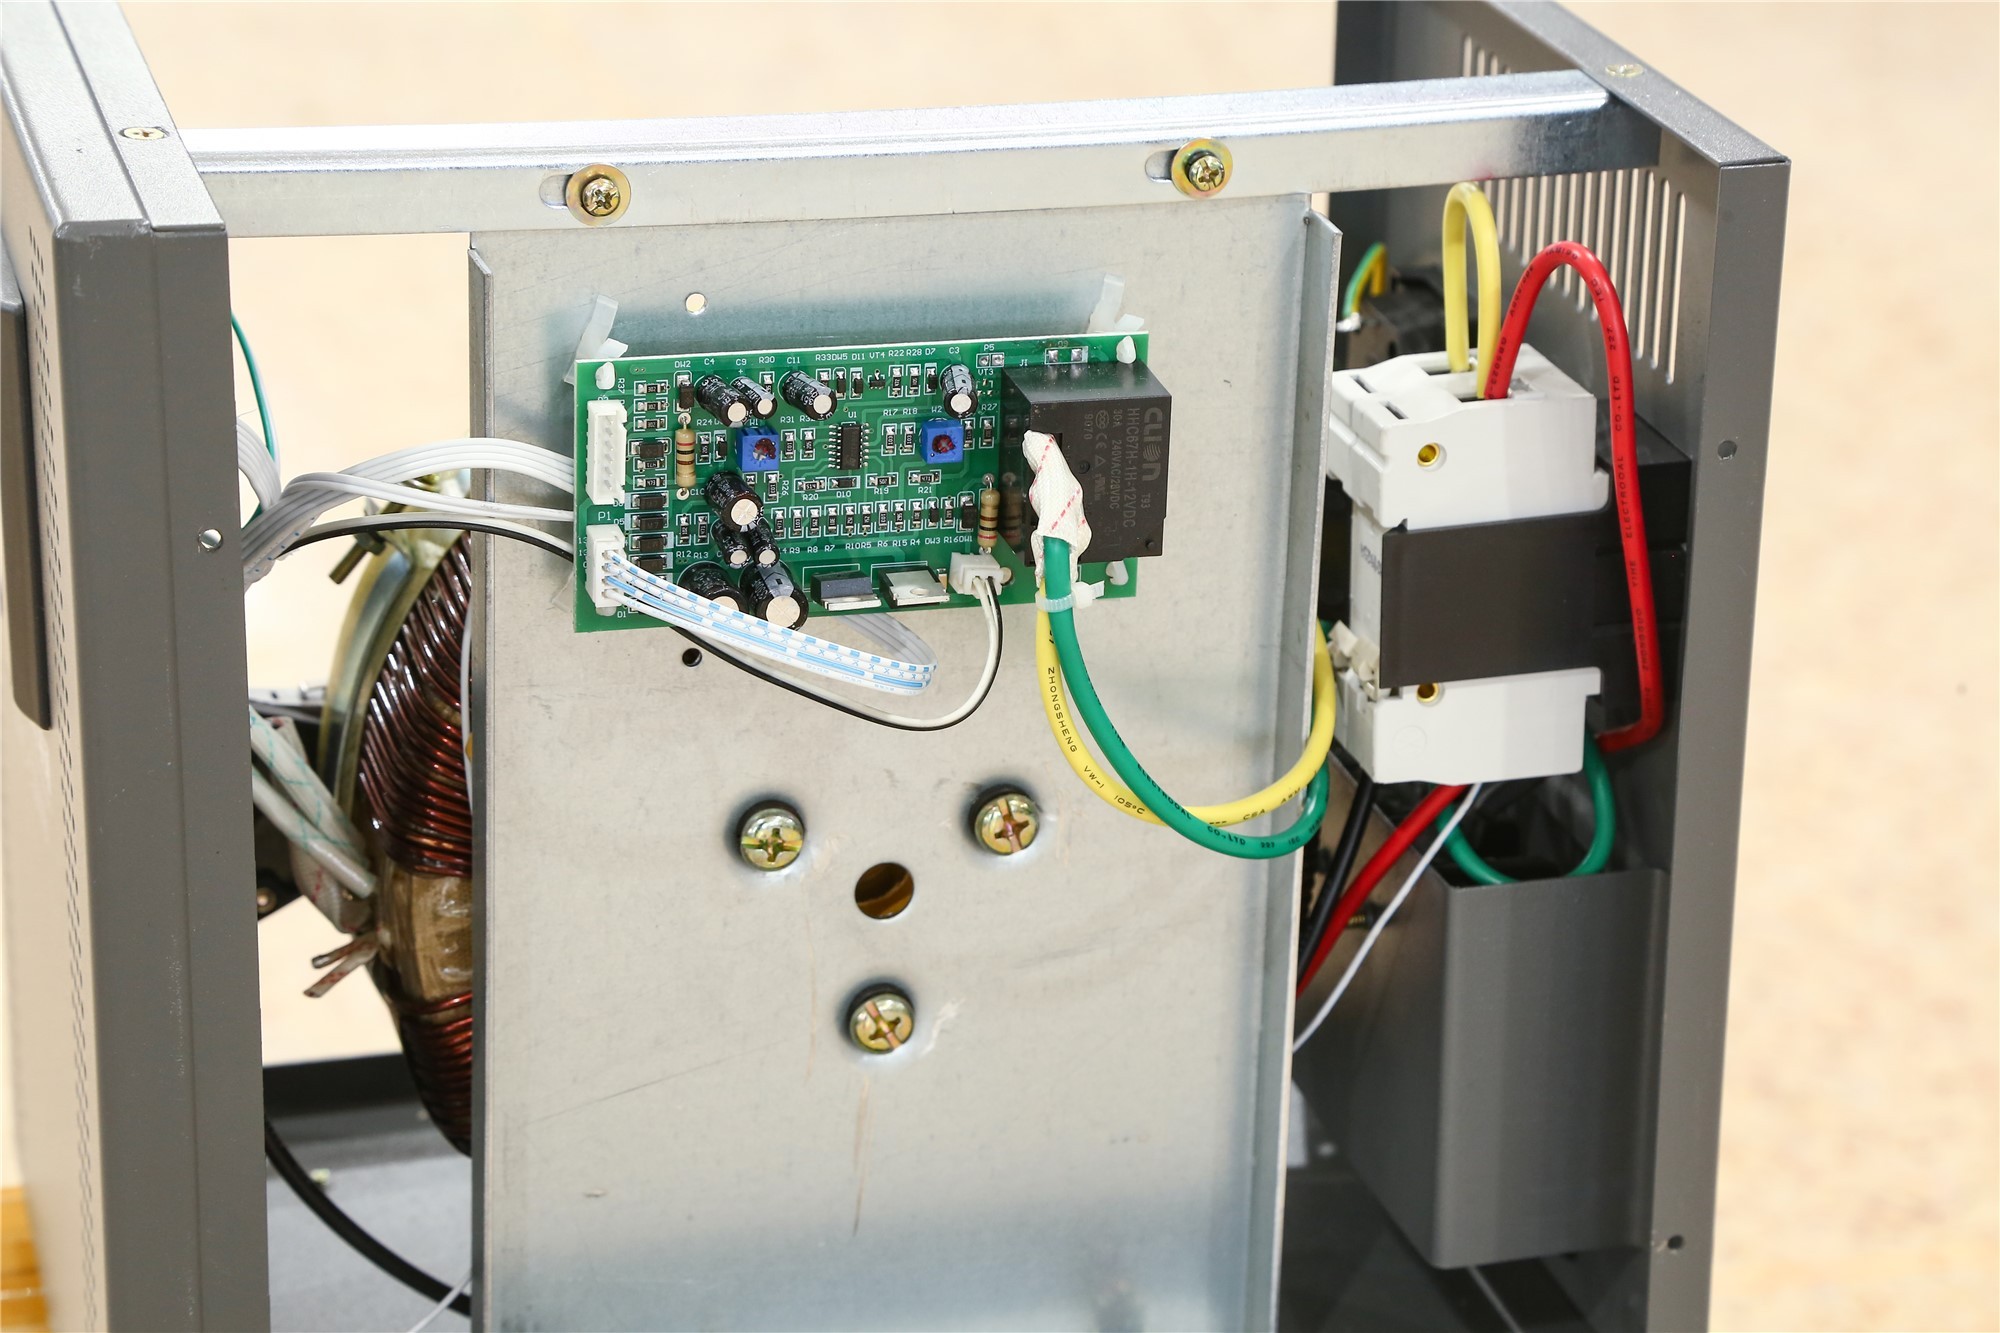 JSW 15KVA Power Conditioner